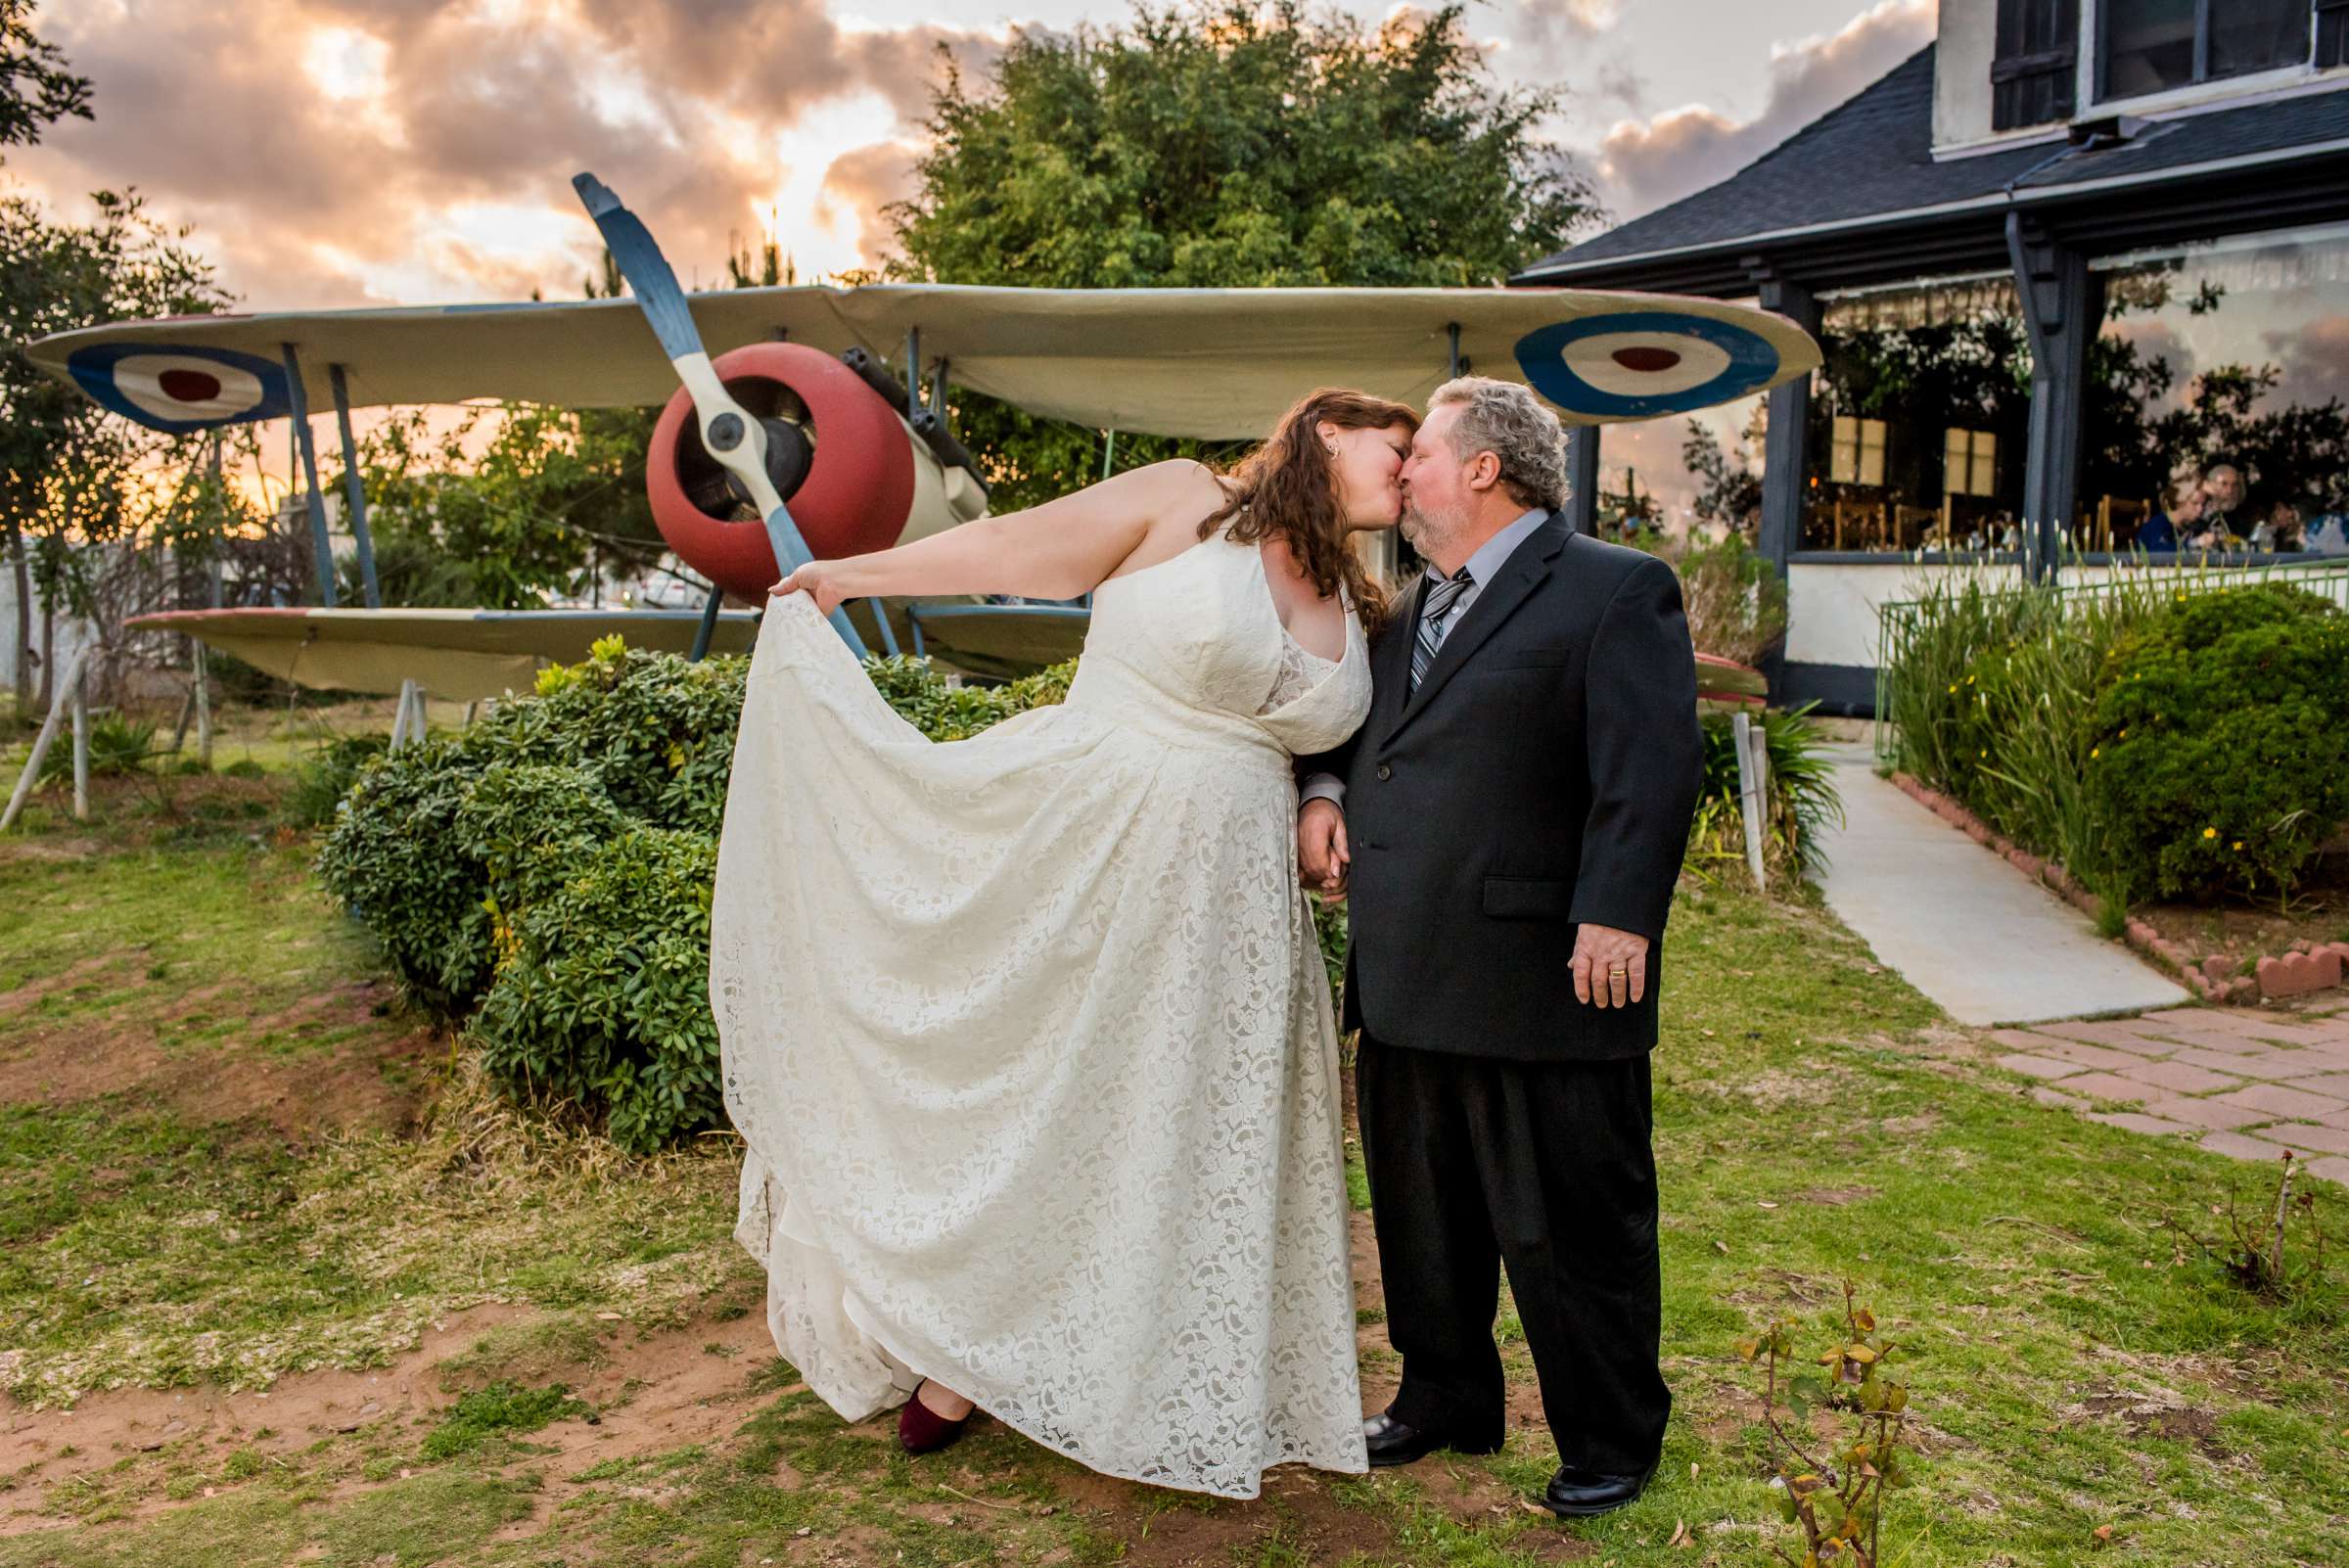 94th Aero Squadron Wedding, Bridget and William (Harry) Wedding Photo #1 by True Photography